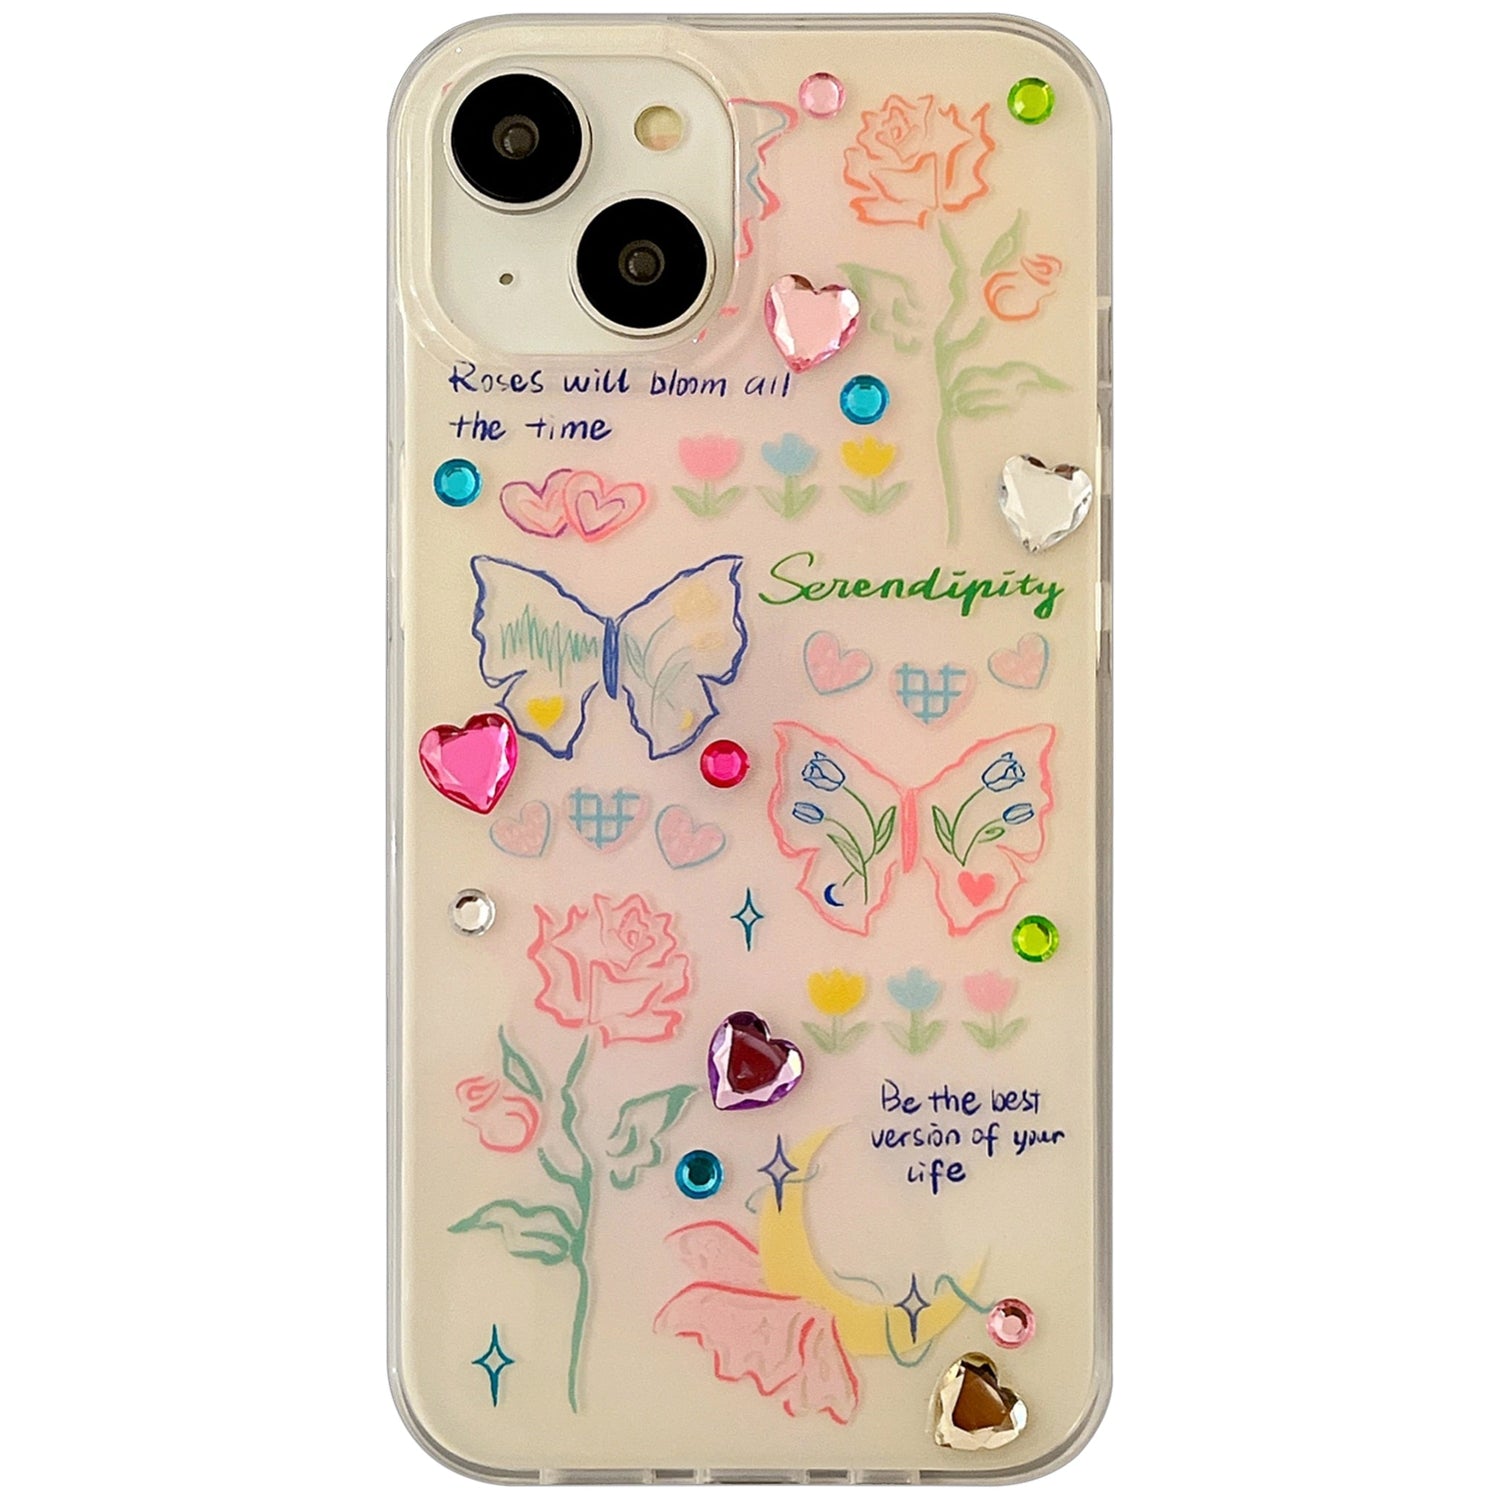 Glitter Heart iPhone Case - iPhone Cases